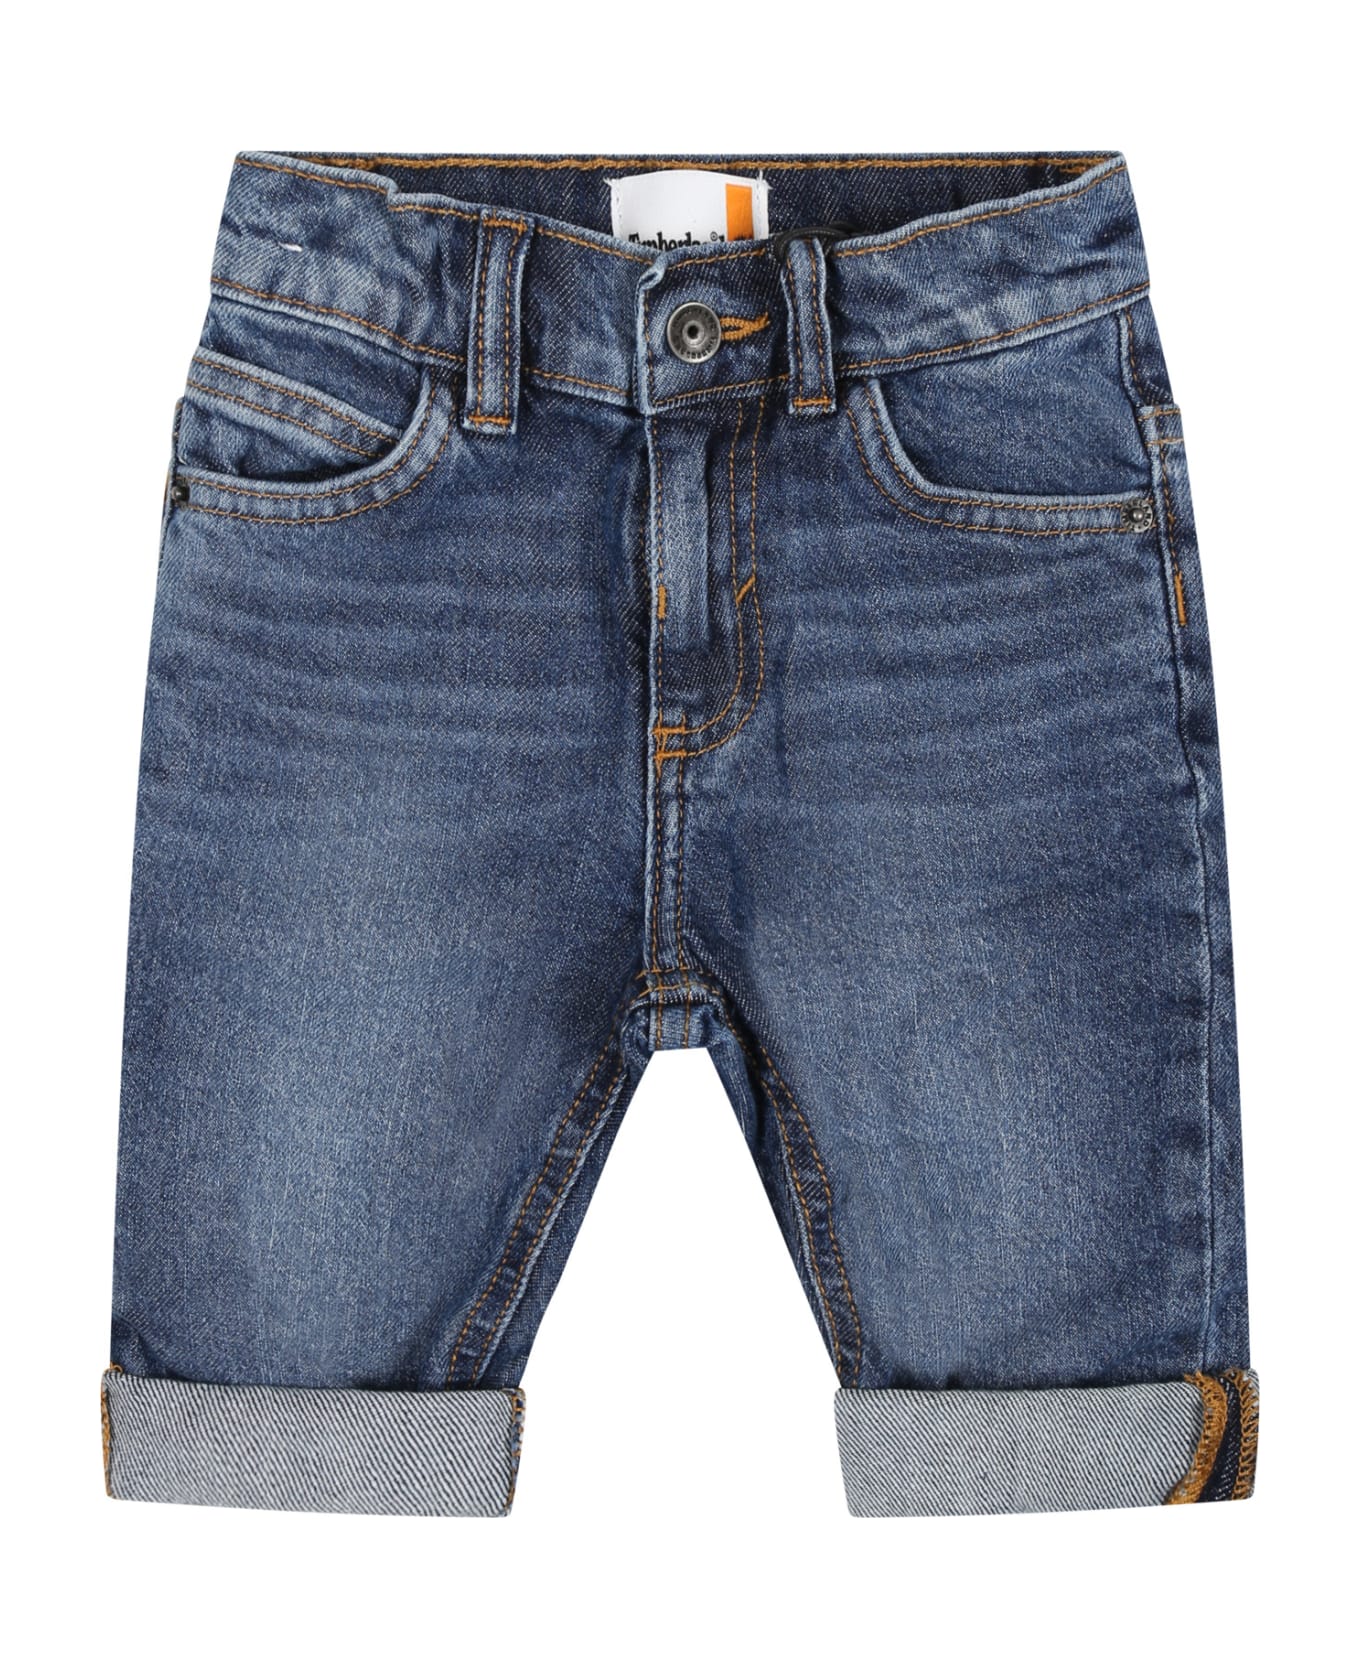 Timberland Denim Jeans For Baby Boy With Logo - Denim ボトムス